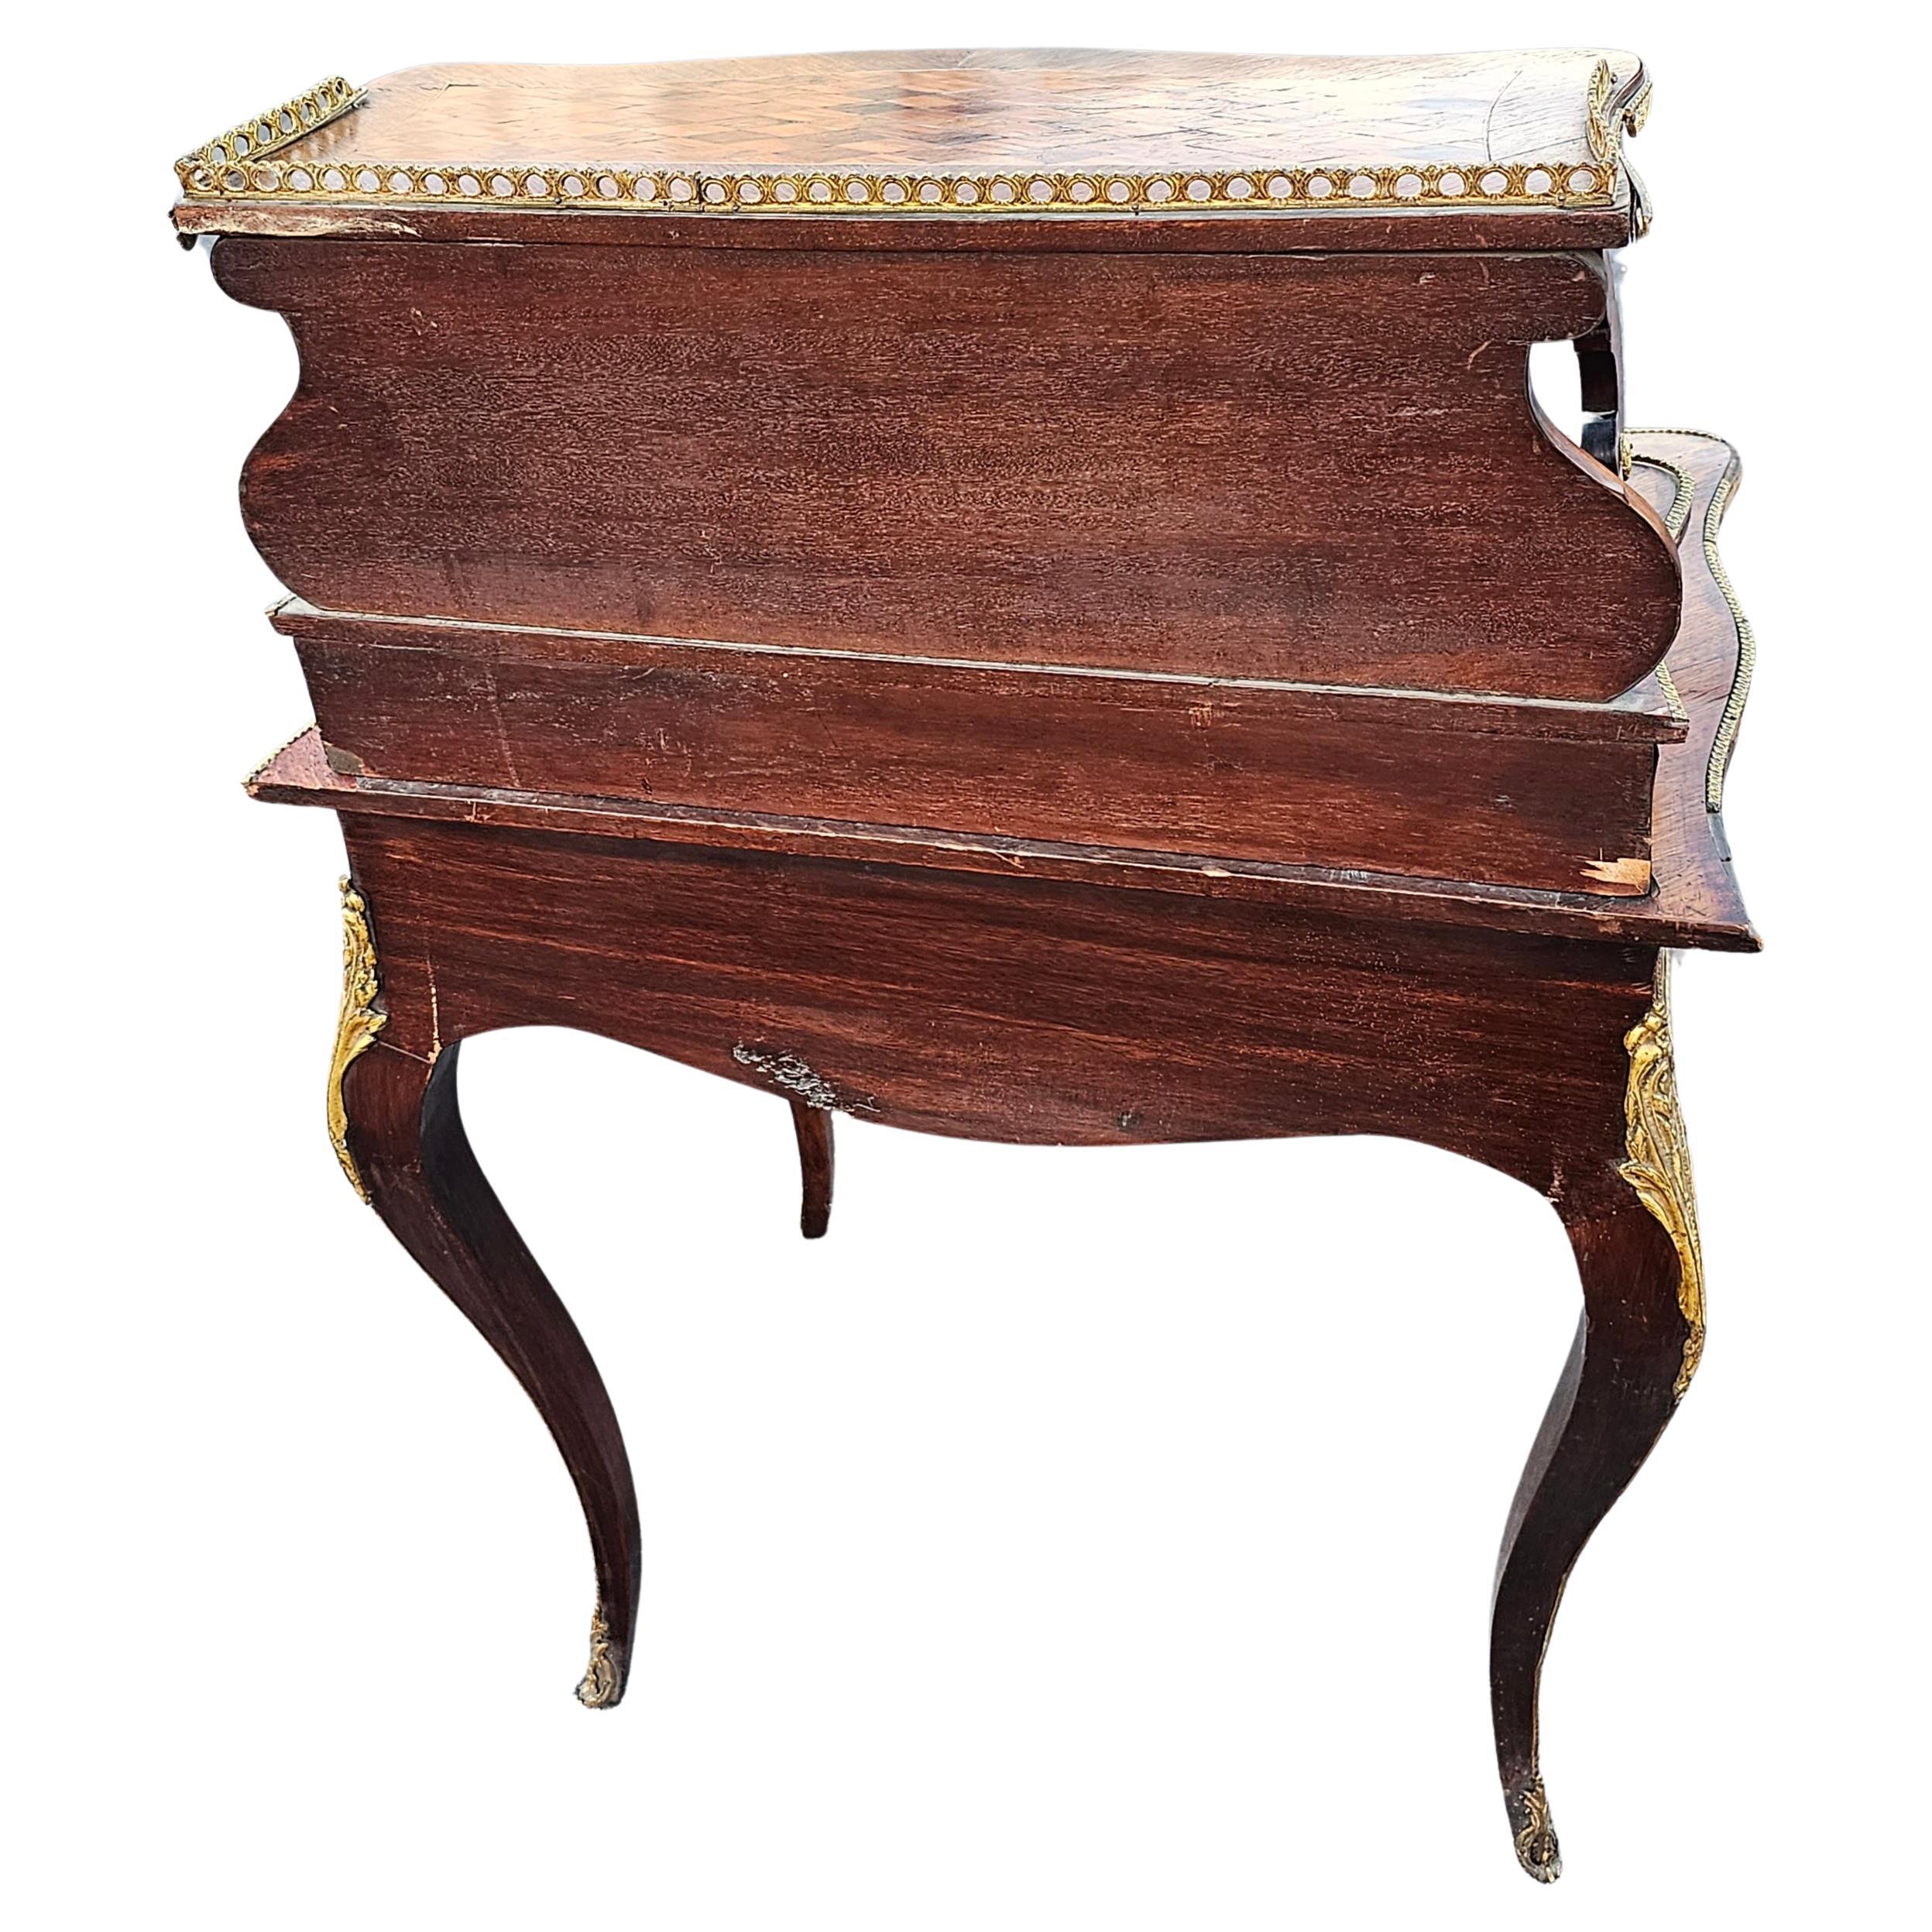 19th C. Louis XV Style Kingwood Marquetry & Ormolu Bonheur Du Jour Writing Desk For Sale 6